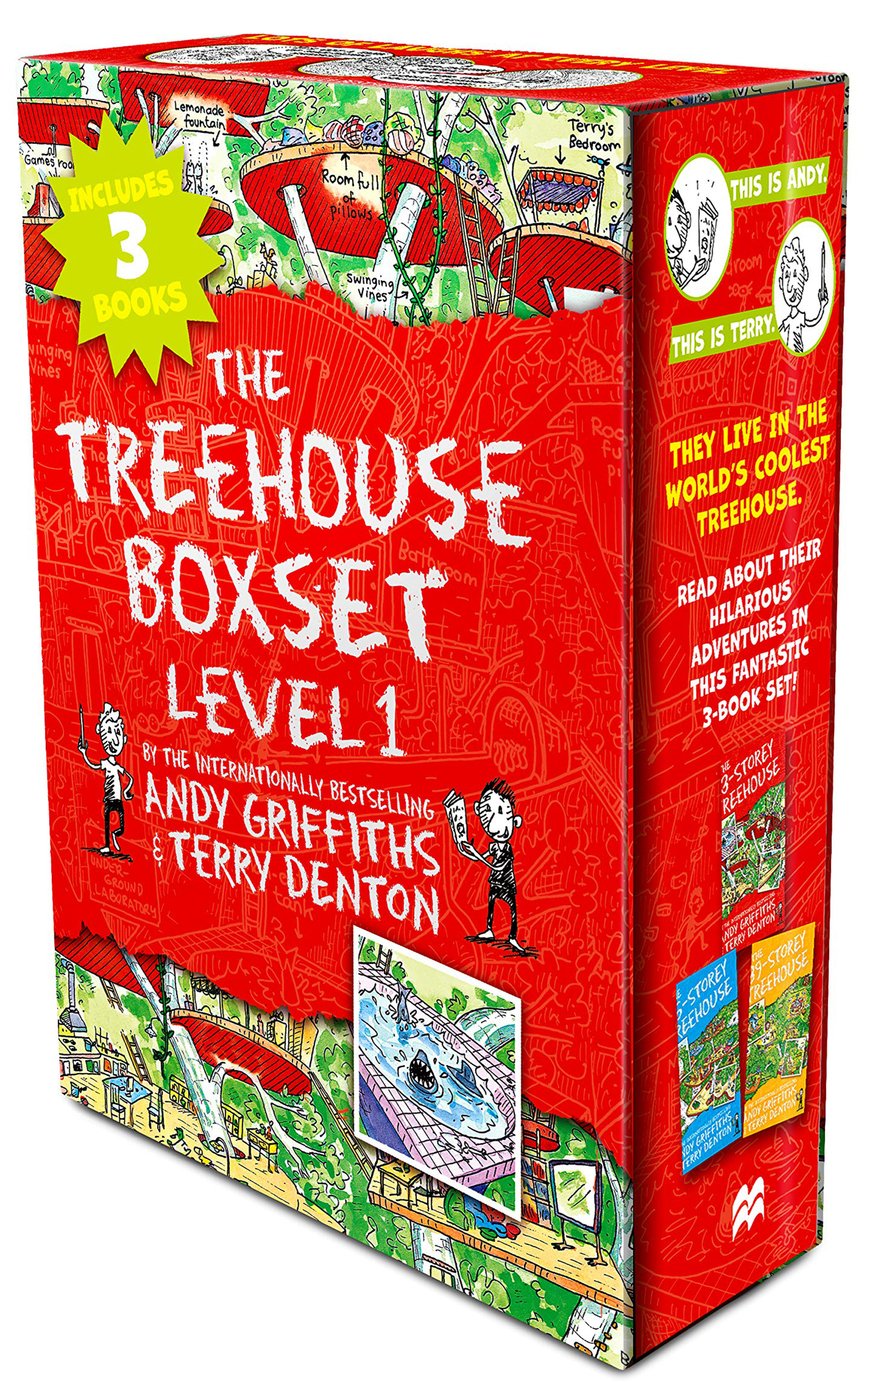 The Treehouse: Level 1 Book Box Set